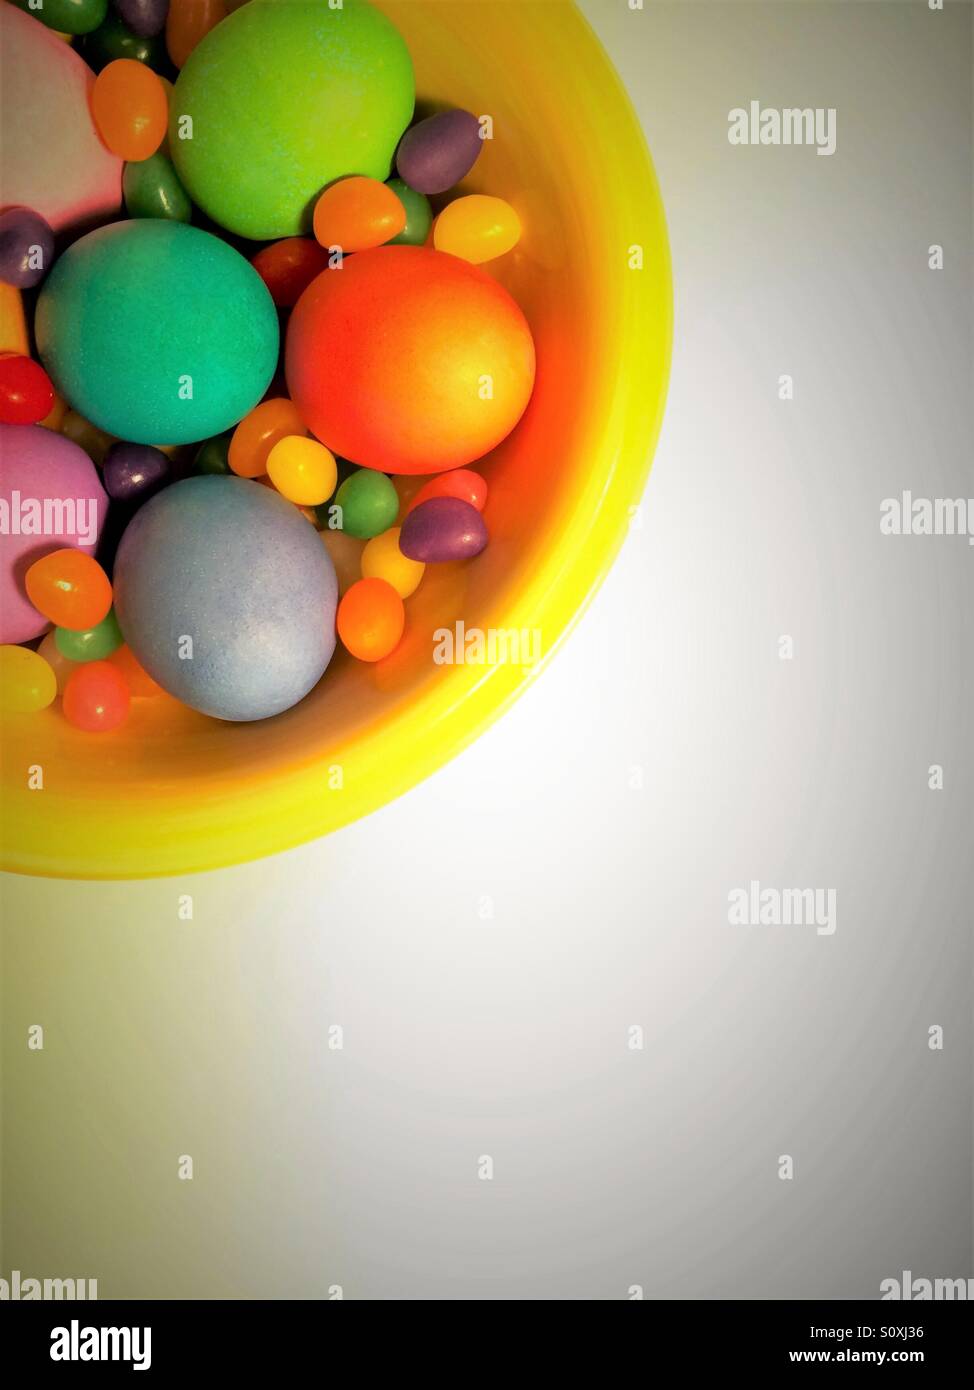 Huevos coloridos y jelly beans en un tazón visto desde arriba sobre fondo blanco. Foto de stock